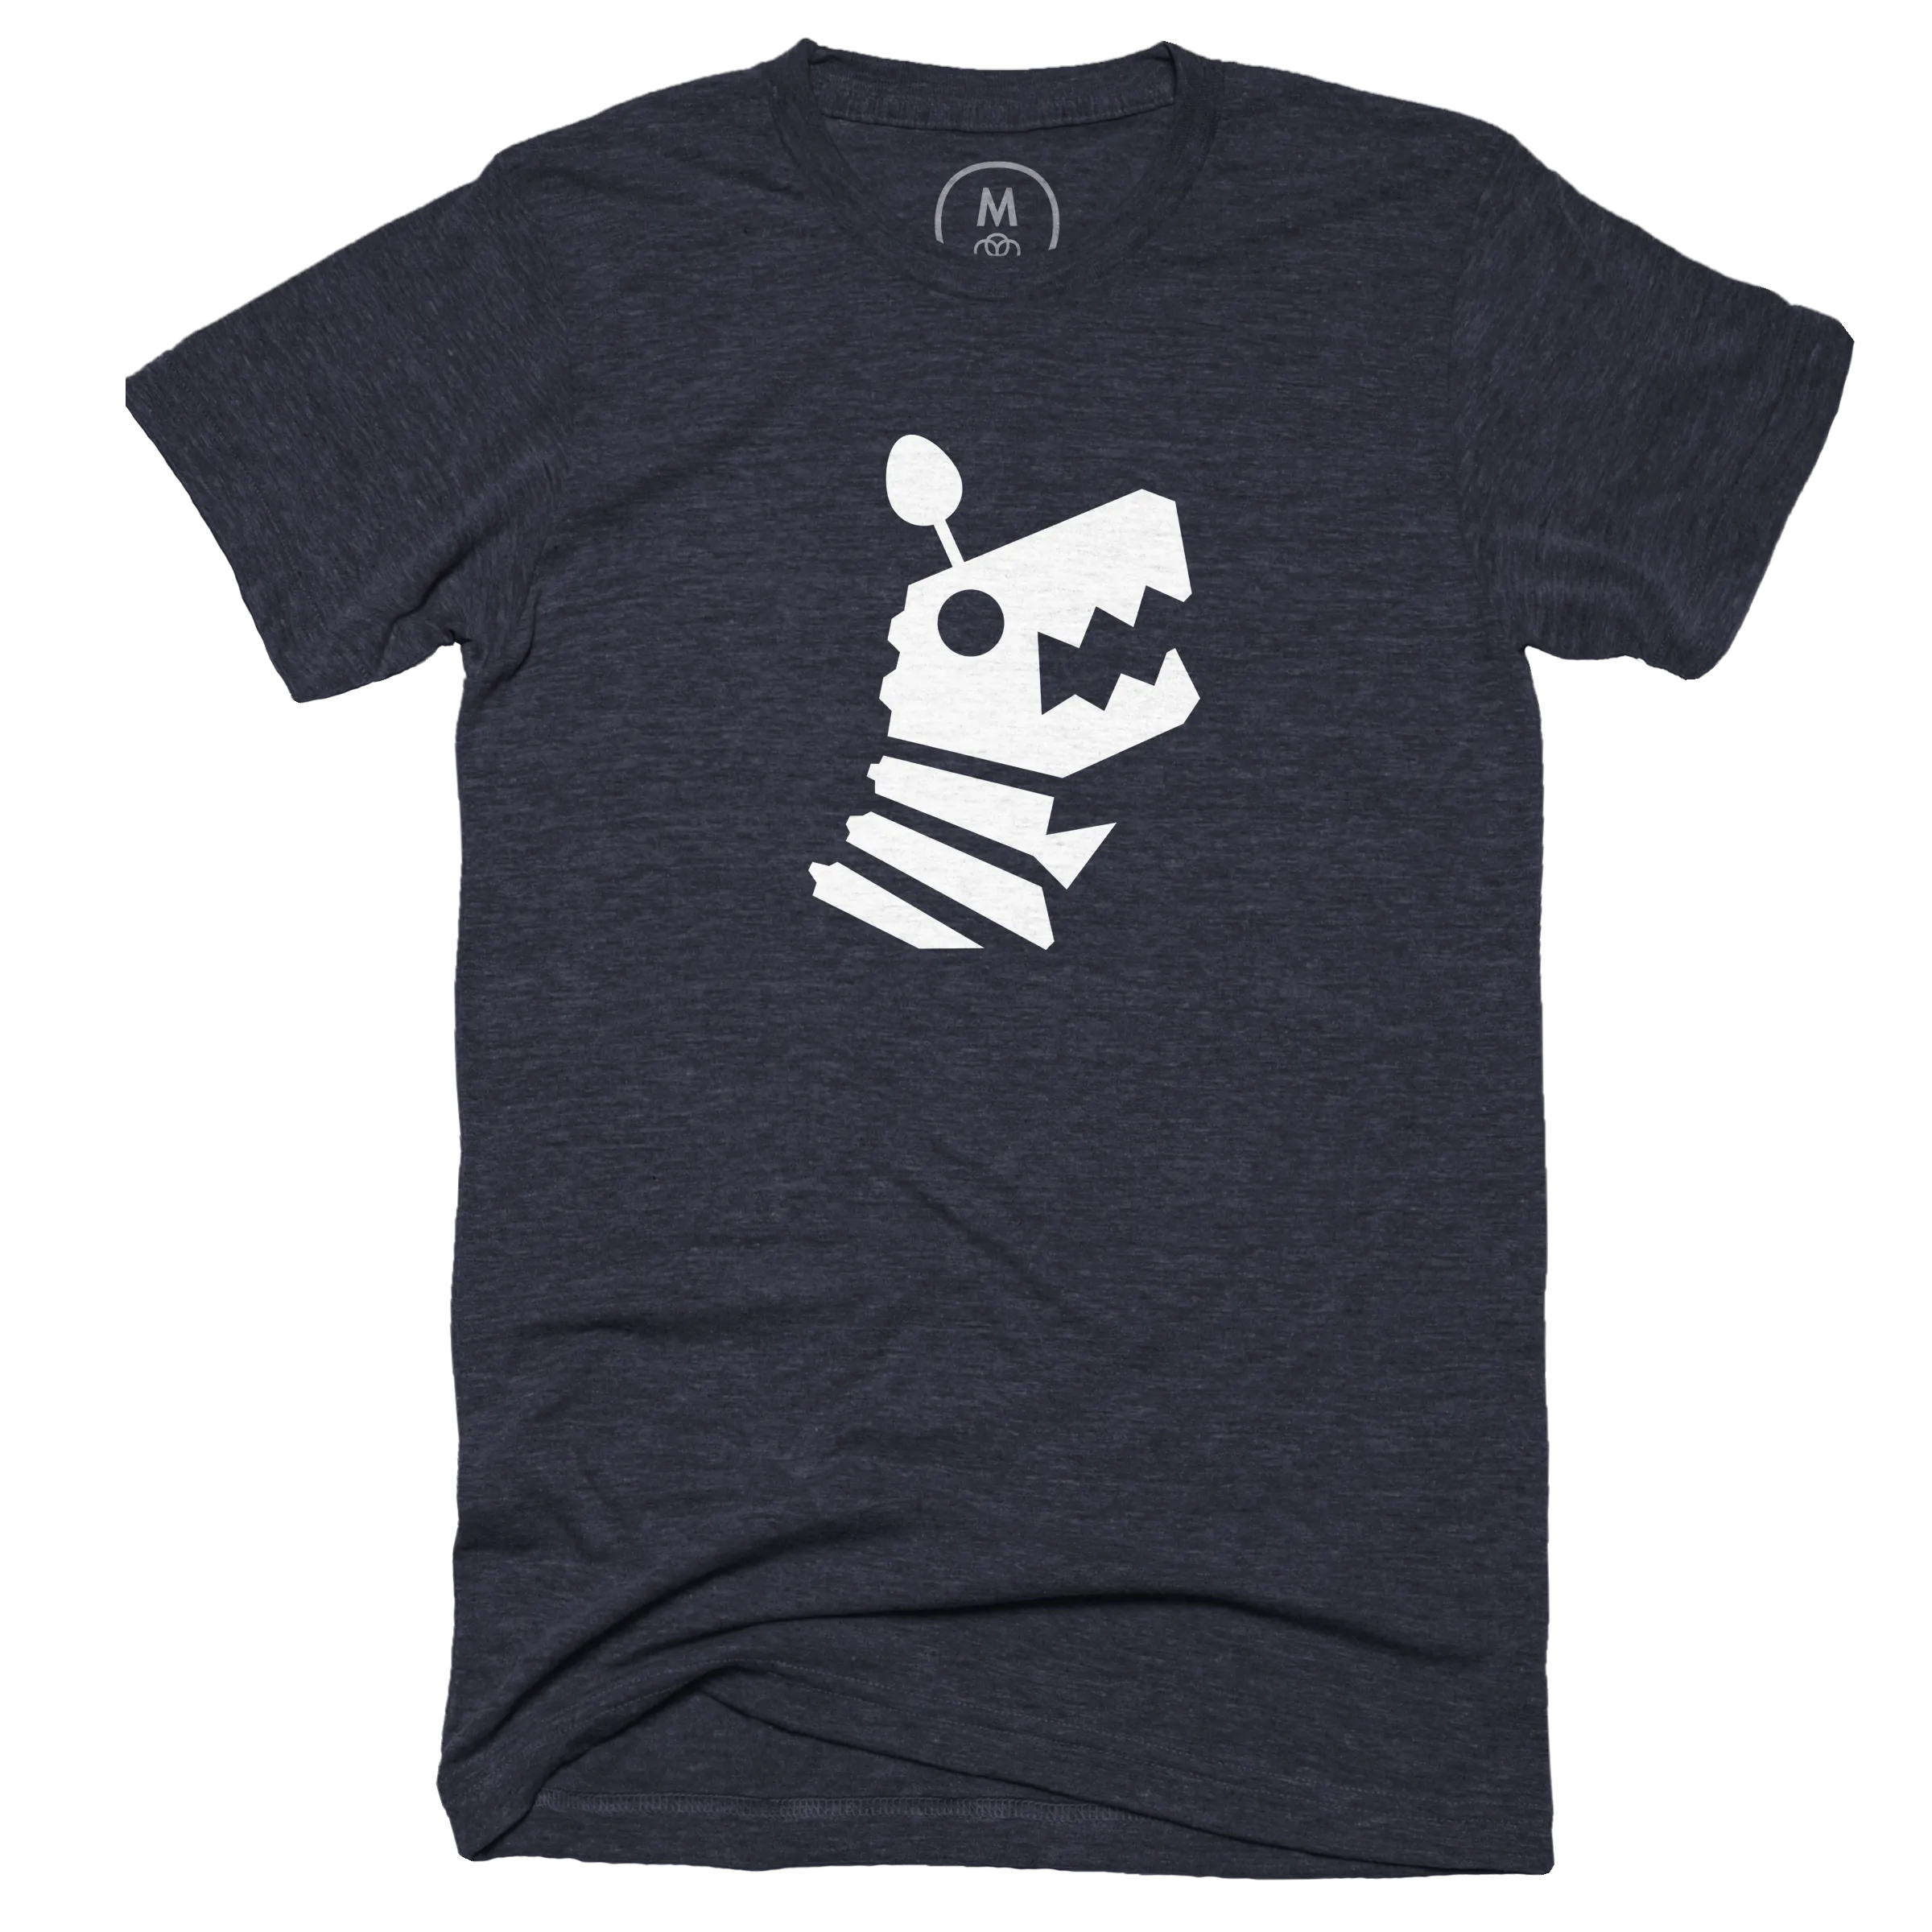 Dino Spoon Apollo T-Shirt” graphic tee, onesie, tank, pullover